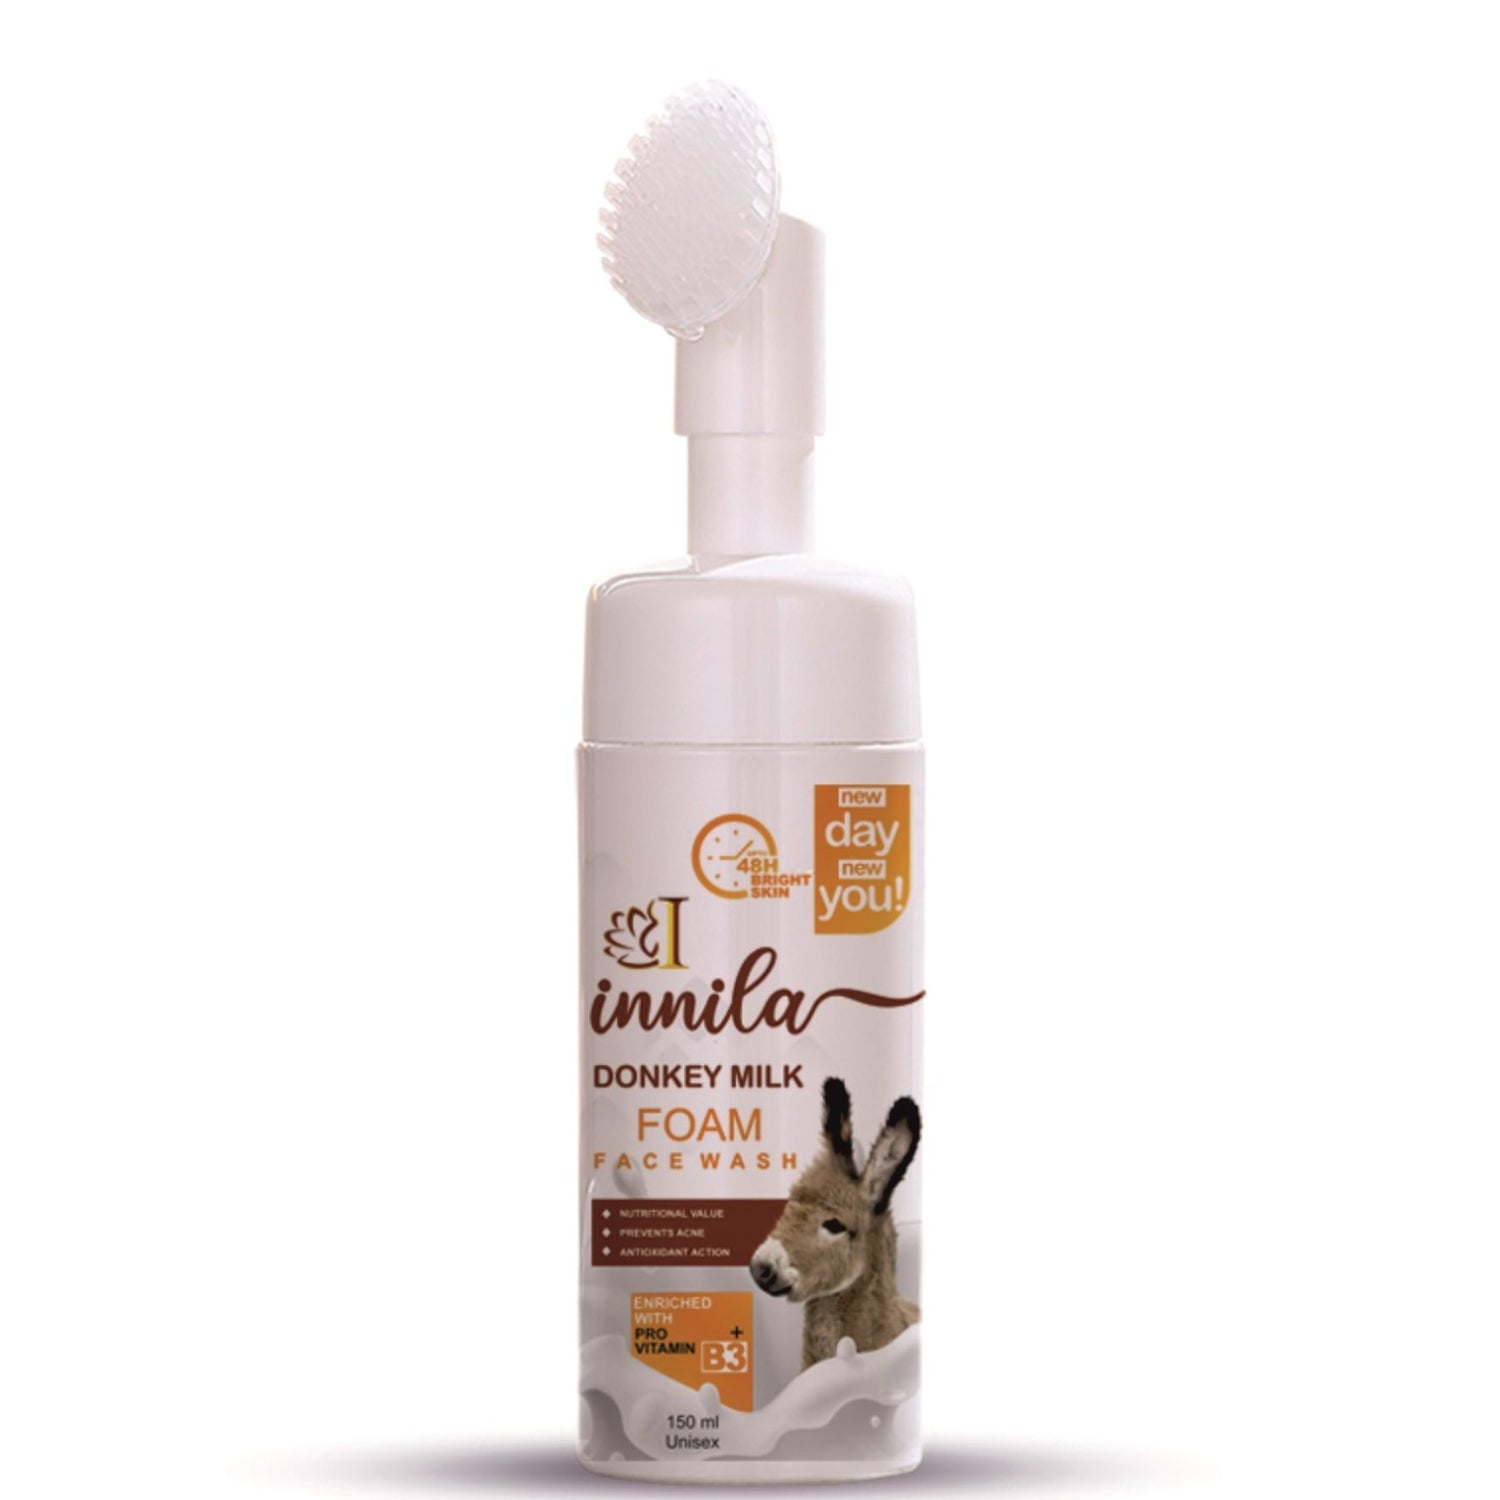 Innila Donkey Milk Foam Face Wash For Skin Brightening & Anti- Aging With Pro Vitamin B3+ -150ML (Men & Women)